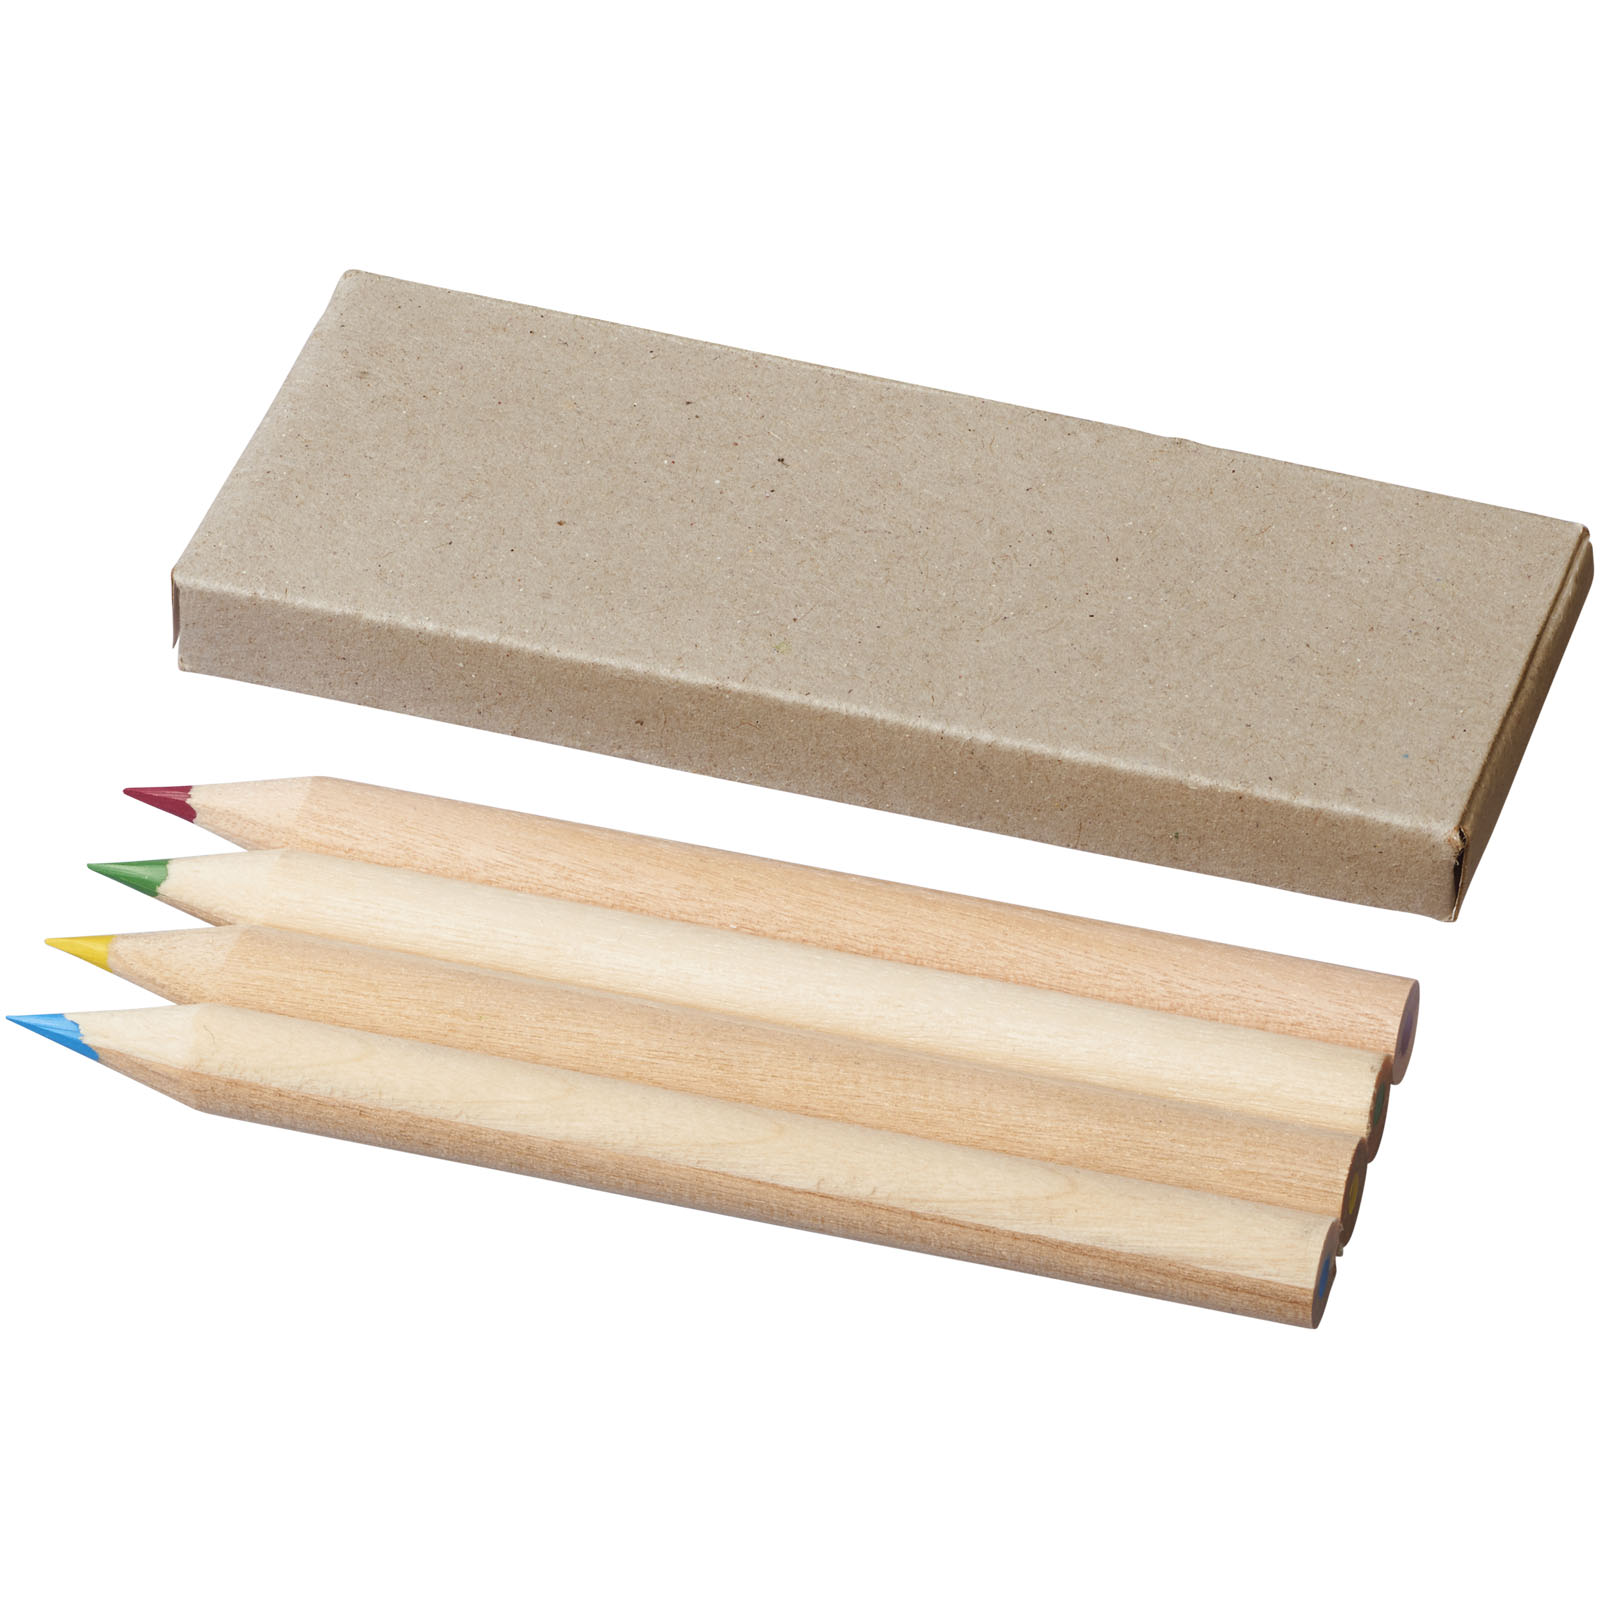 Pens & Writing - Tullik 4-piece coloured pencil set